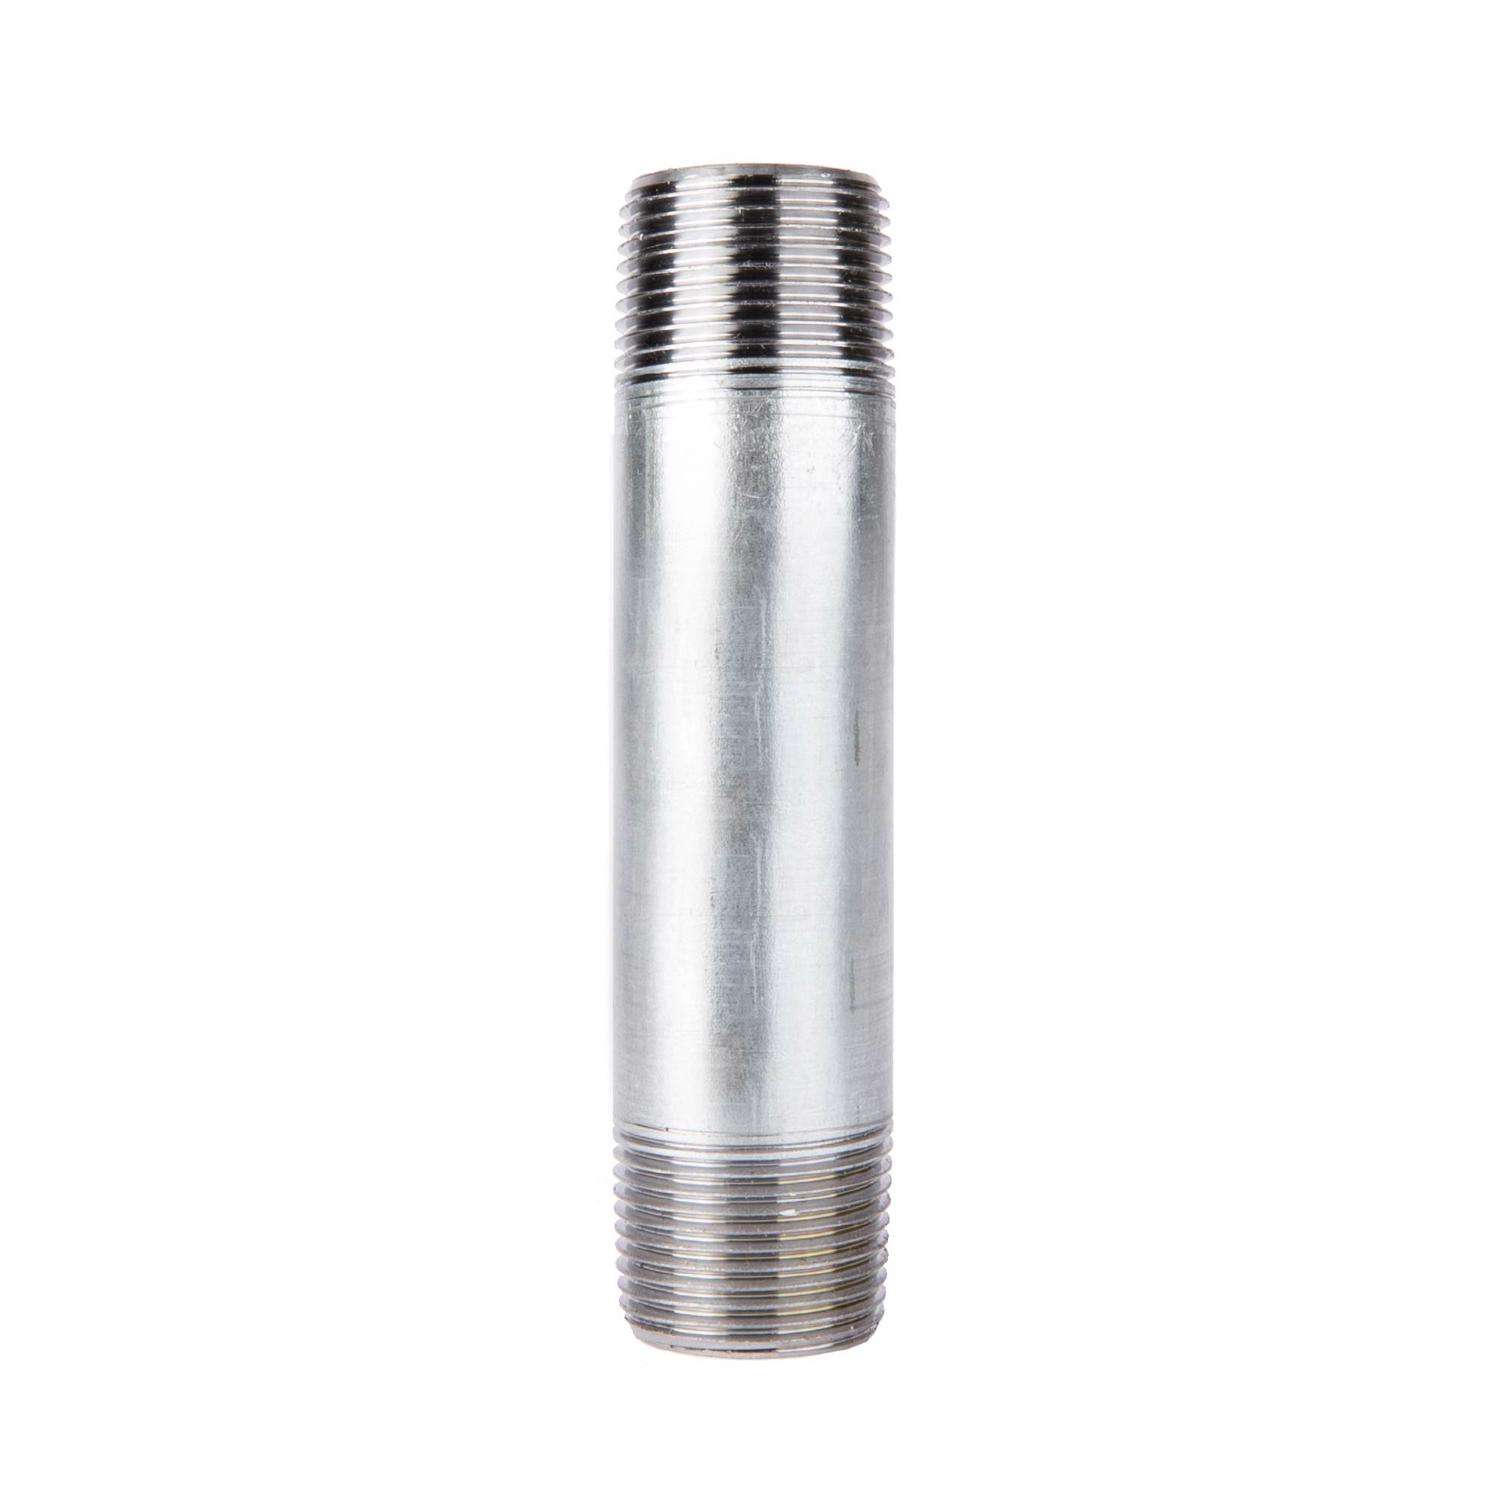 Primex 83237 1-1/2 Inch x 24 Inch Galvanized Steel Nipple